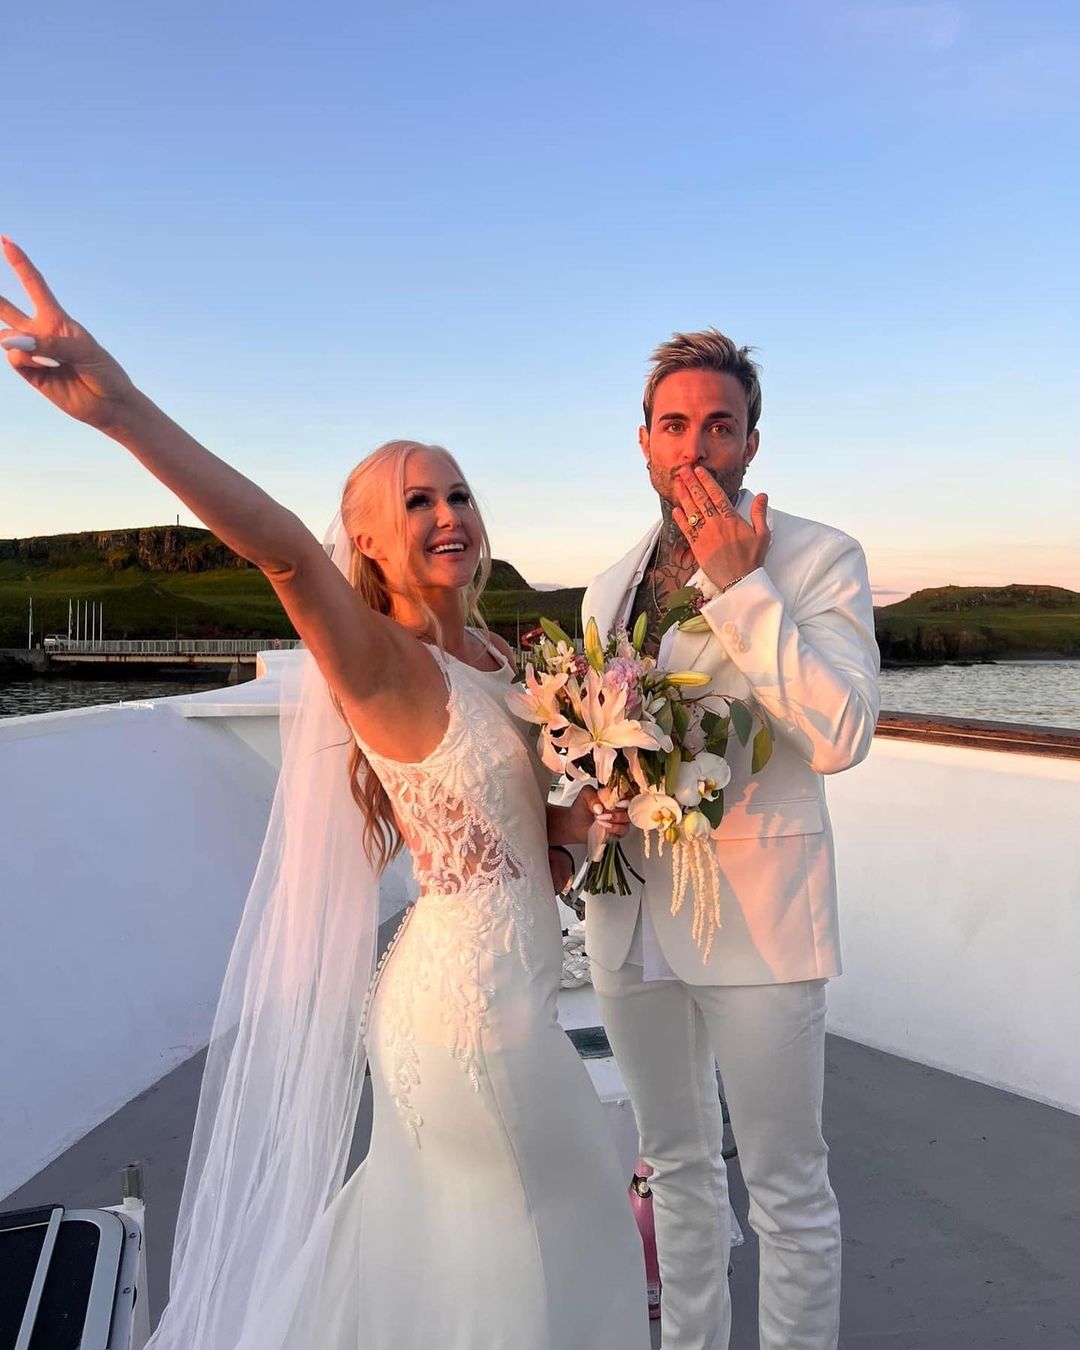 Arna Karls e Ian Hachmann intercambiando anillos en su ceremonia de boda